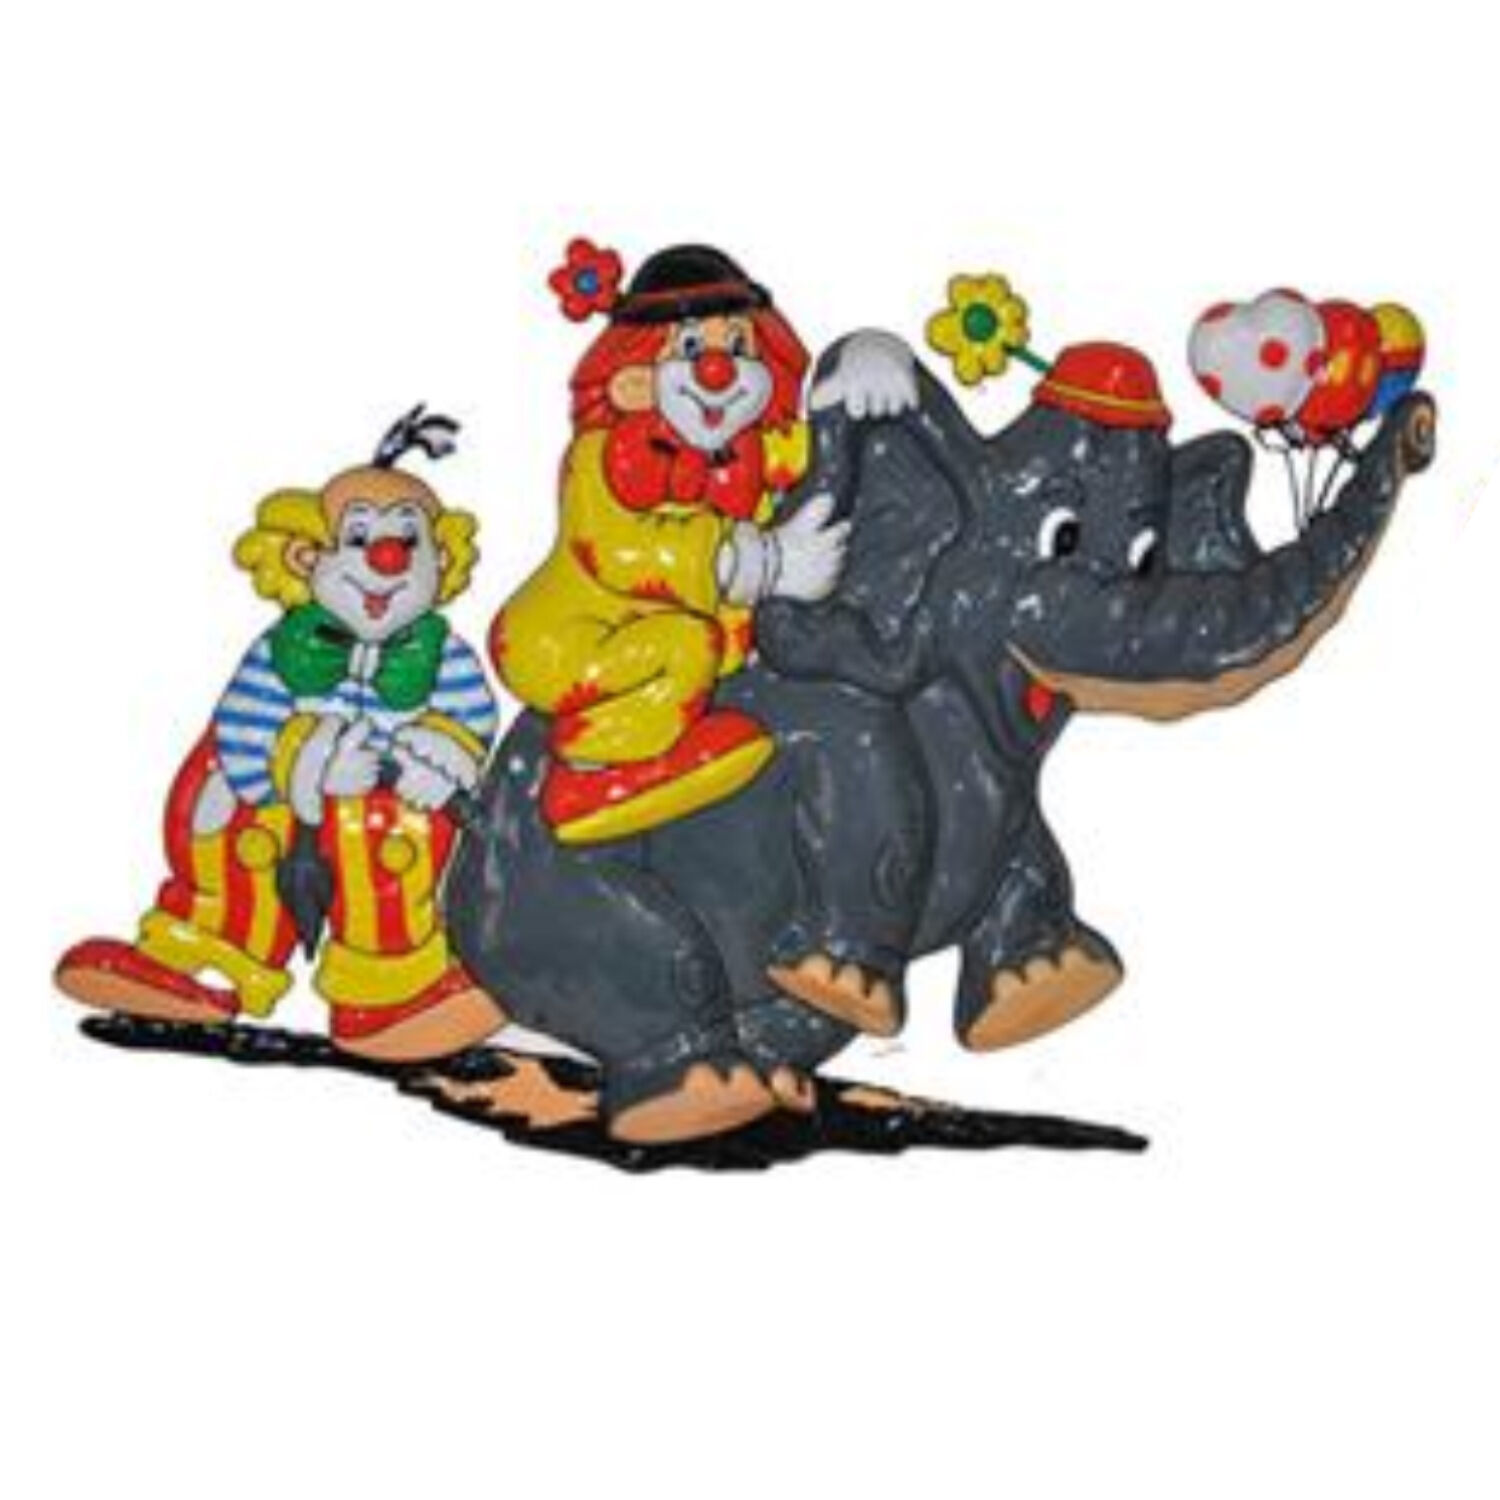 NEU Wand-Deko Karnevals-Clown mit Elefant, ca. 60cm